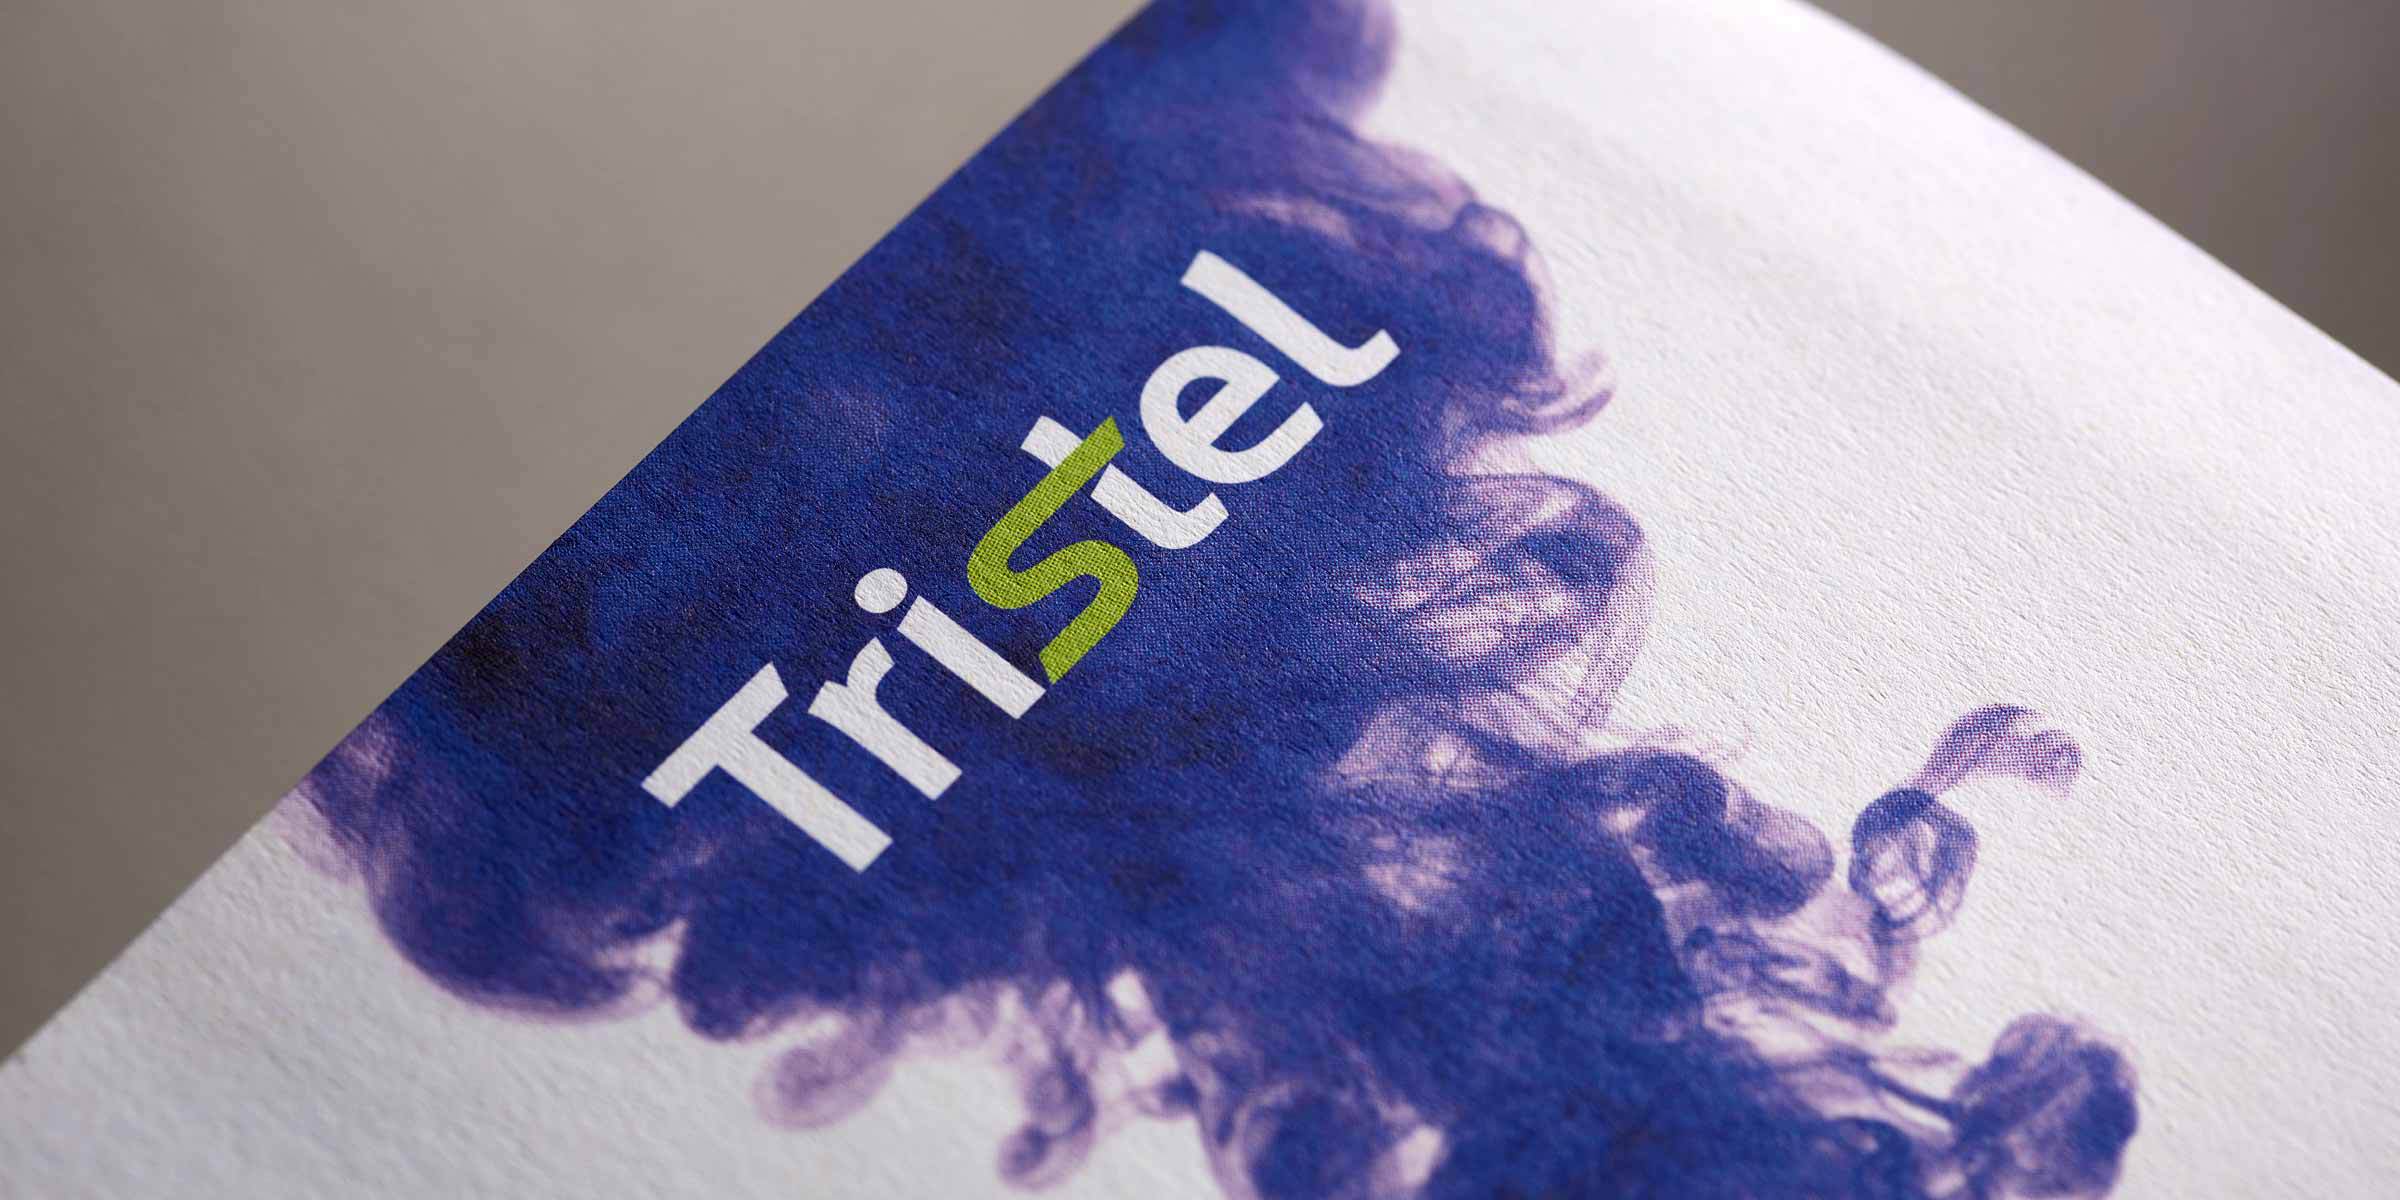 Tristel logo printed on purple medical type background 